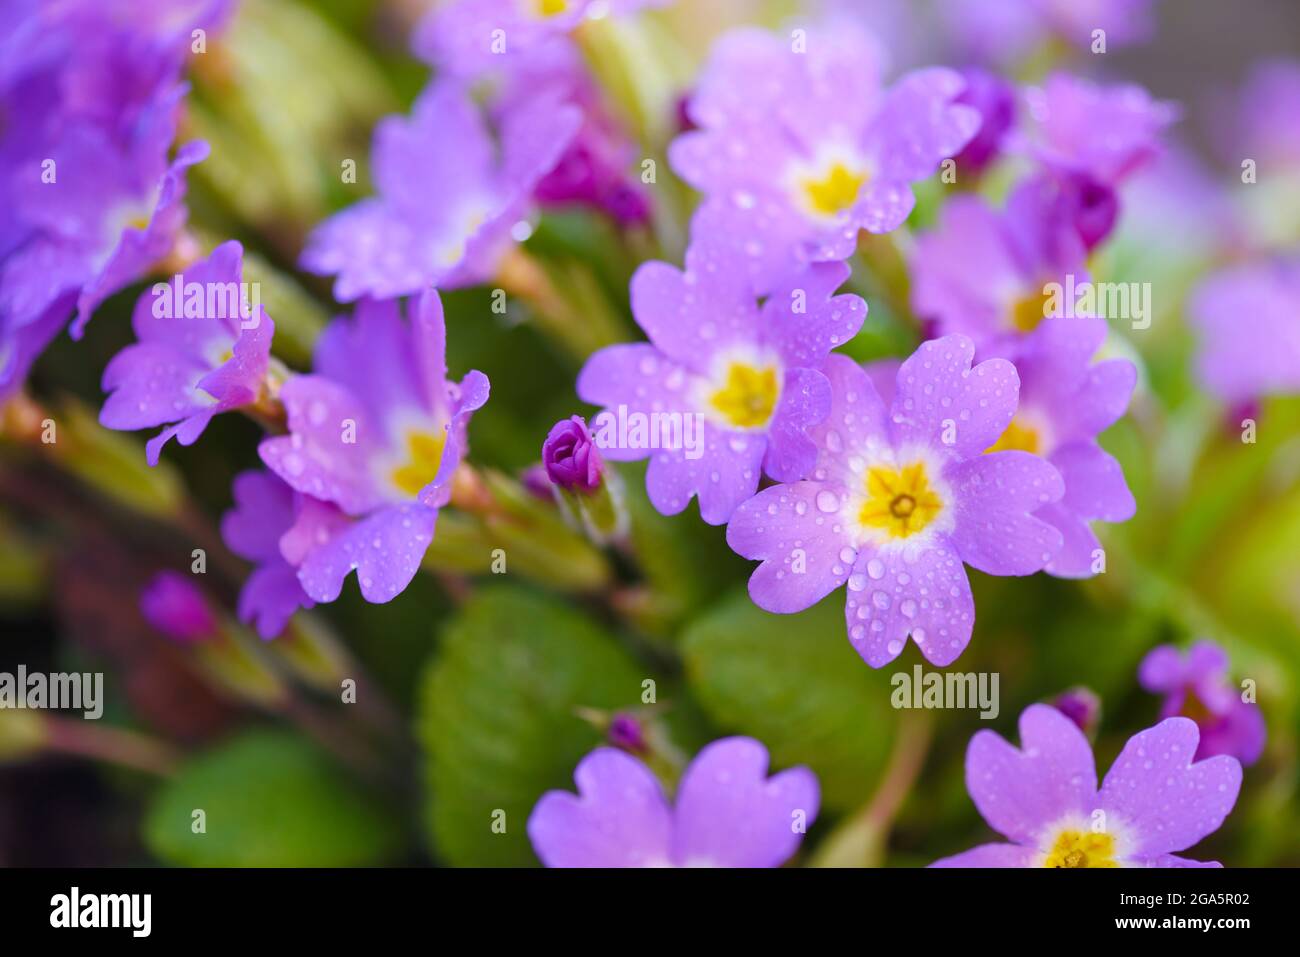 Spring flowers of Primula juliae (Julias Primrose) or purple primrose with dew drops in the spring garden. Stock Photo